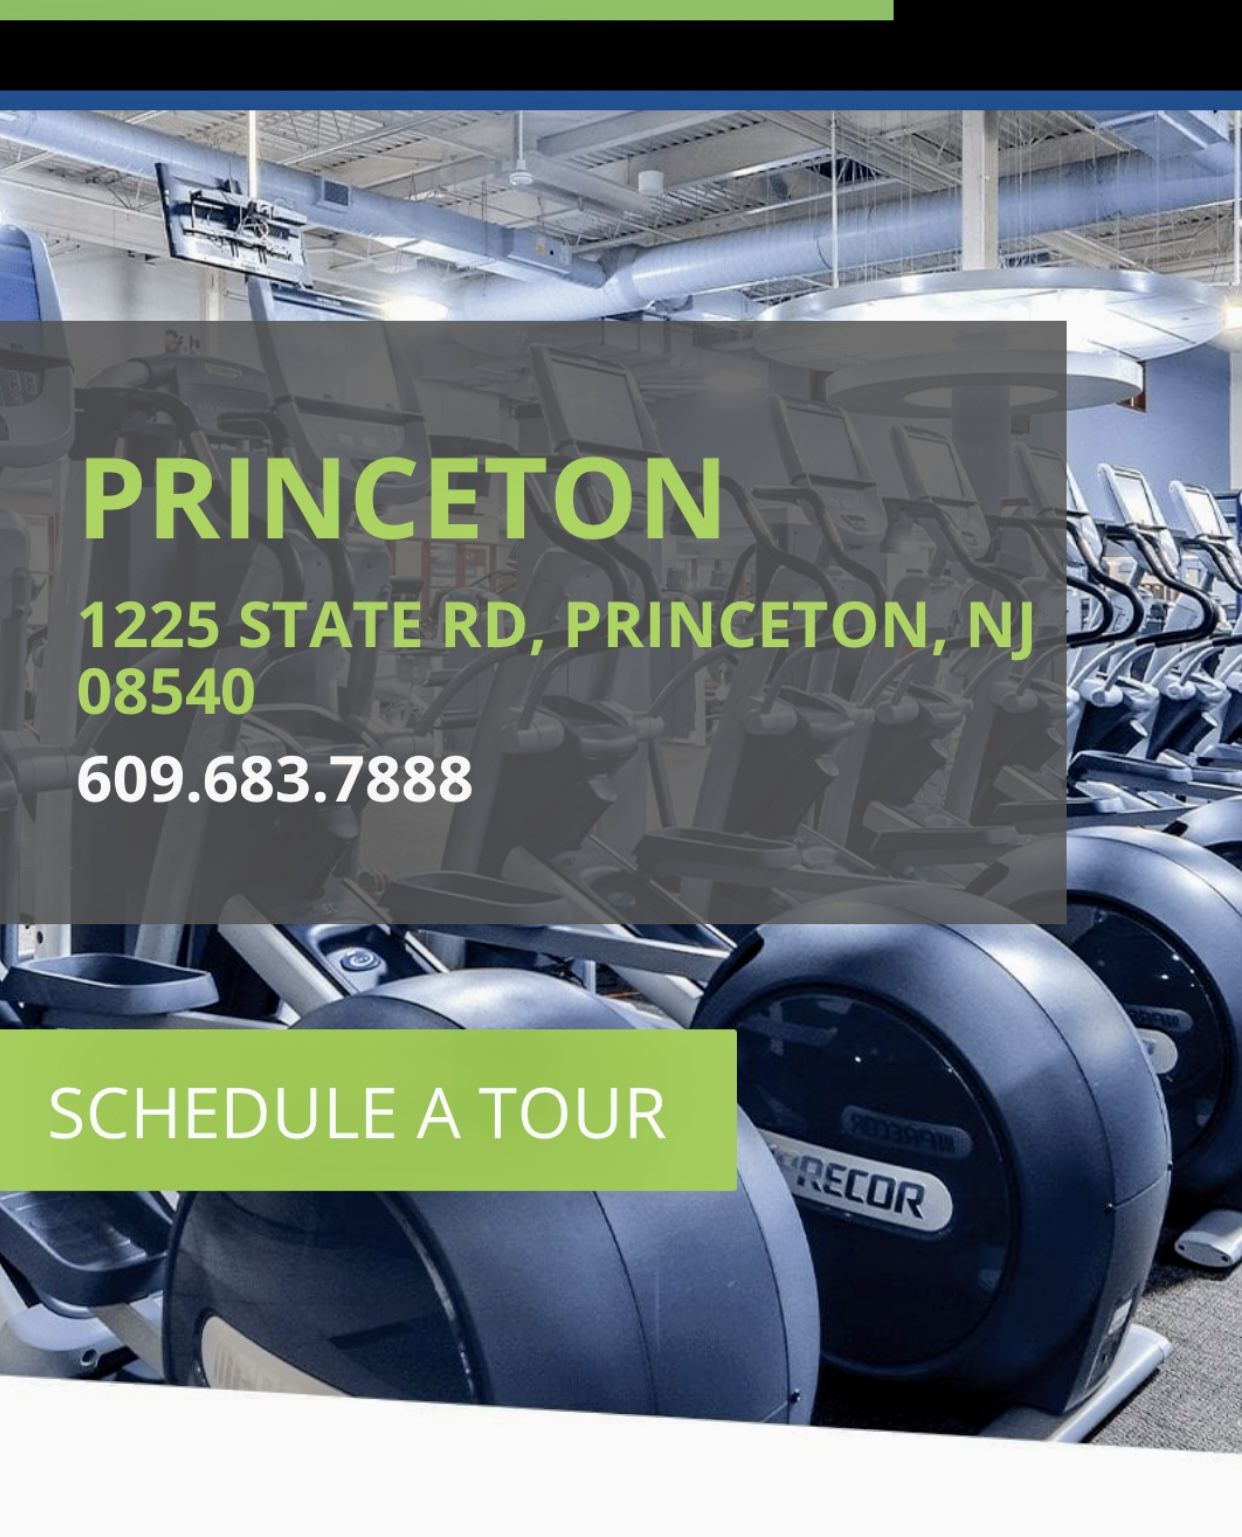 Princeton Fitness & Wellness Center Founding Memberships